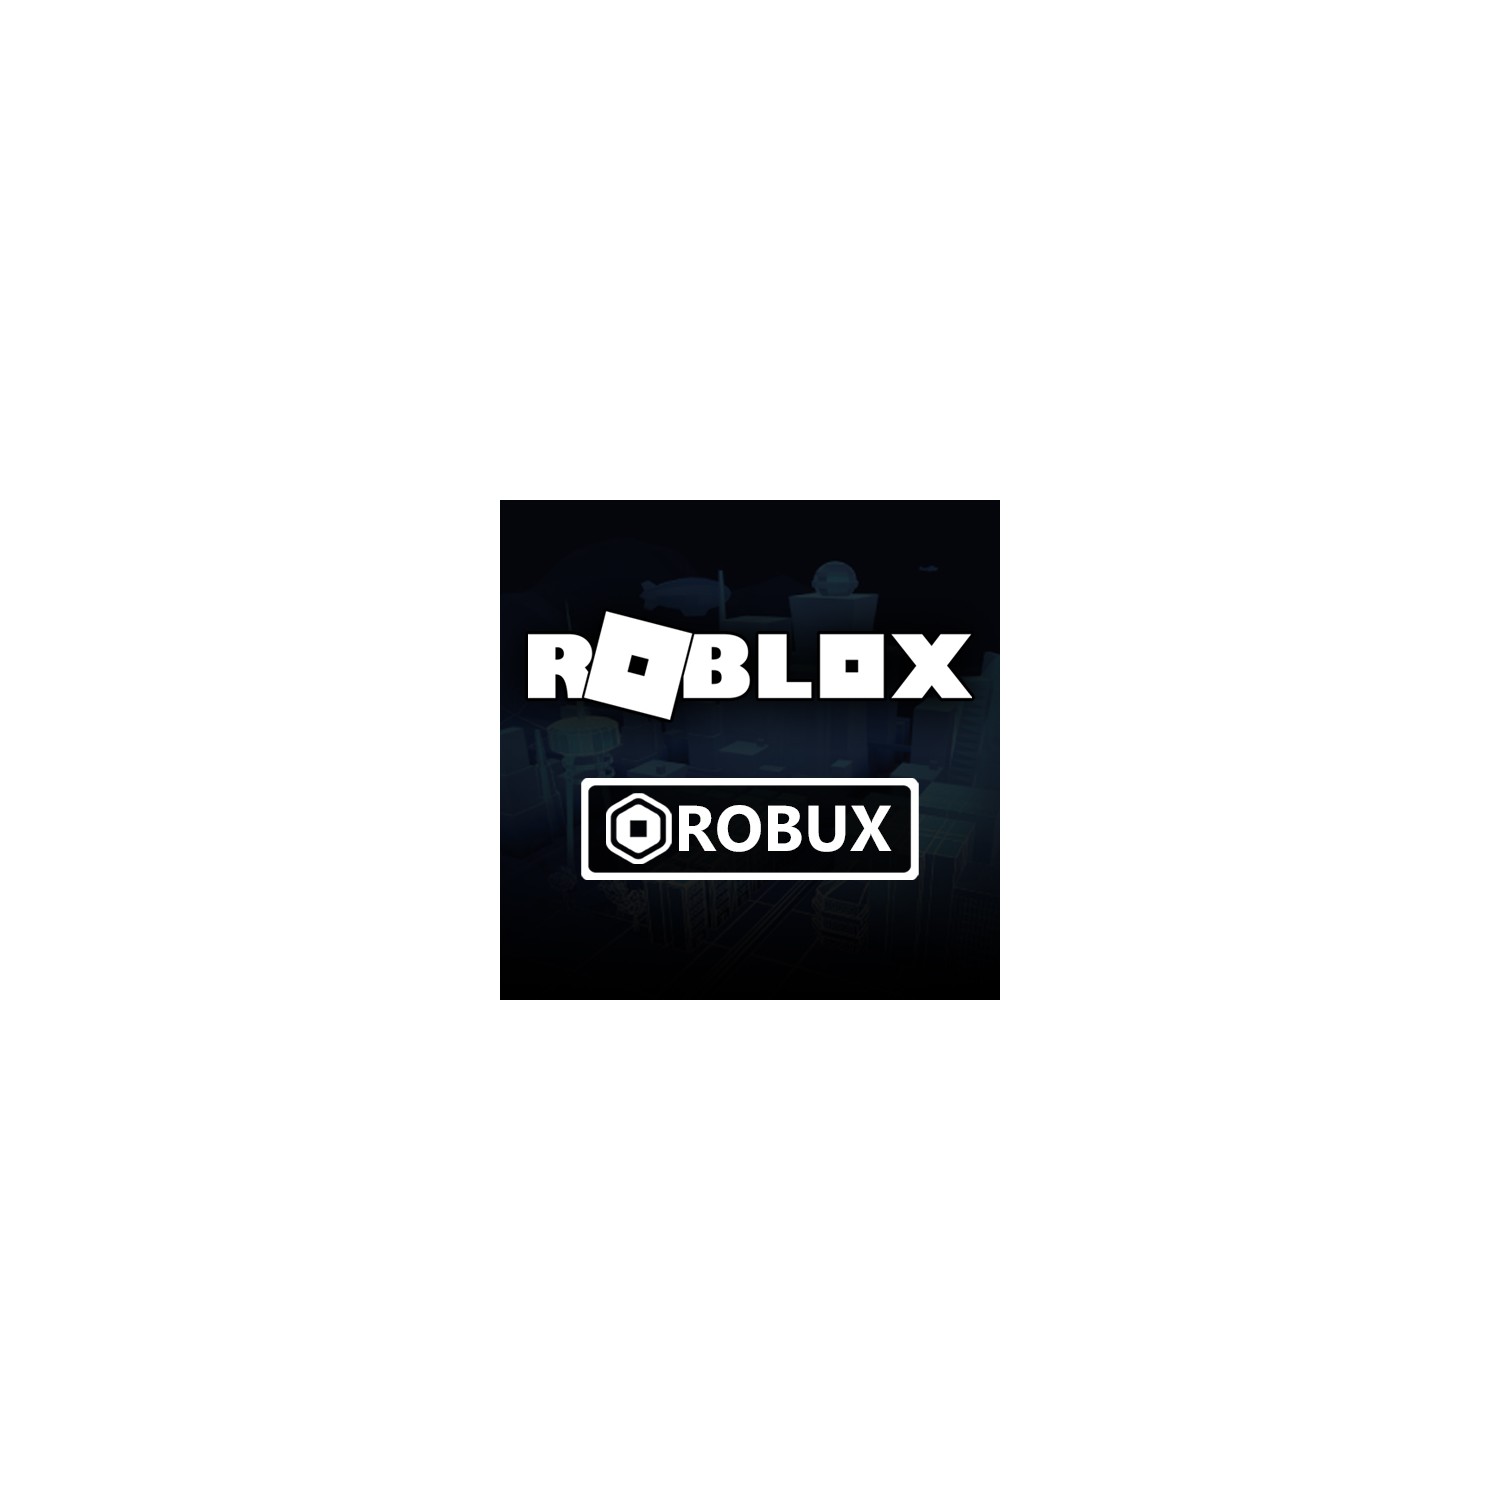 Roblox 800 Robux Fiyati Taksit Secenekleri Ile Satin Al - roblox 400 robux kaç tl